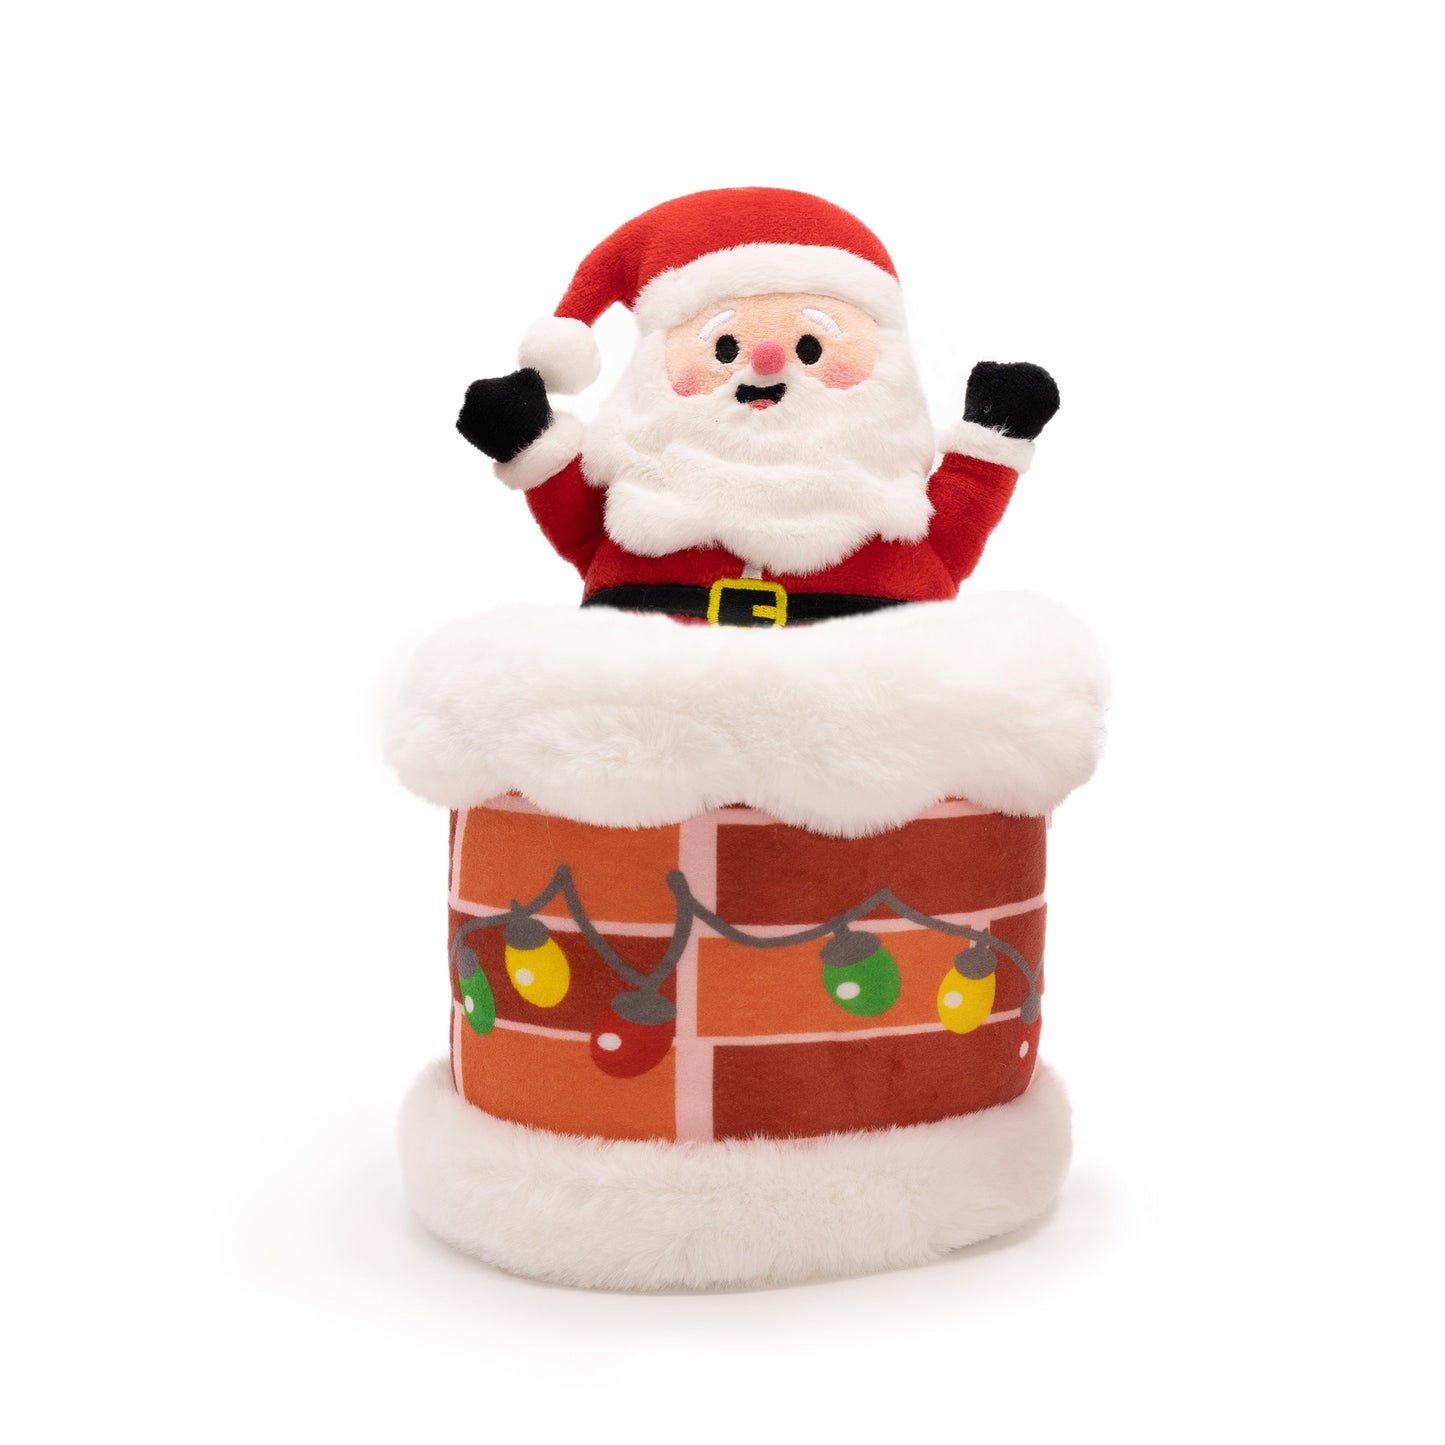 Peek-A-Boo Plush - Santa in Chimney